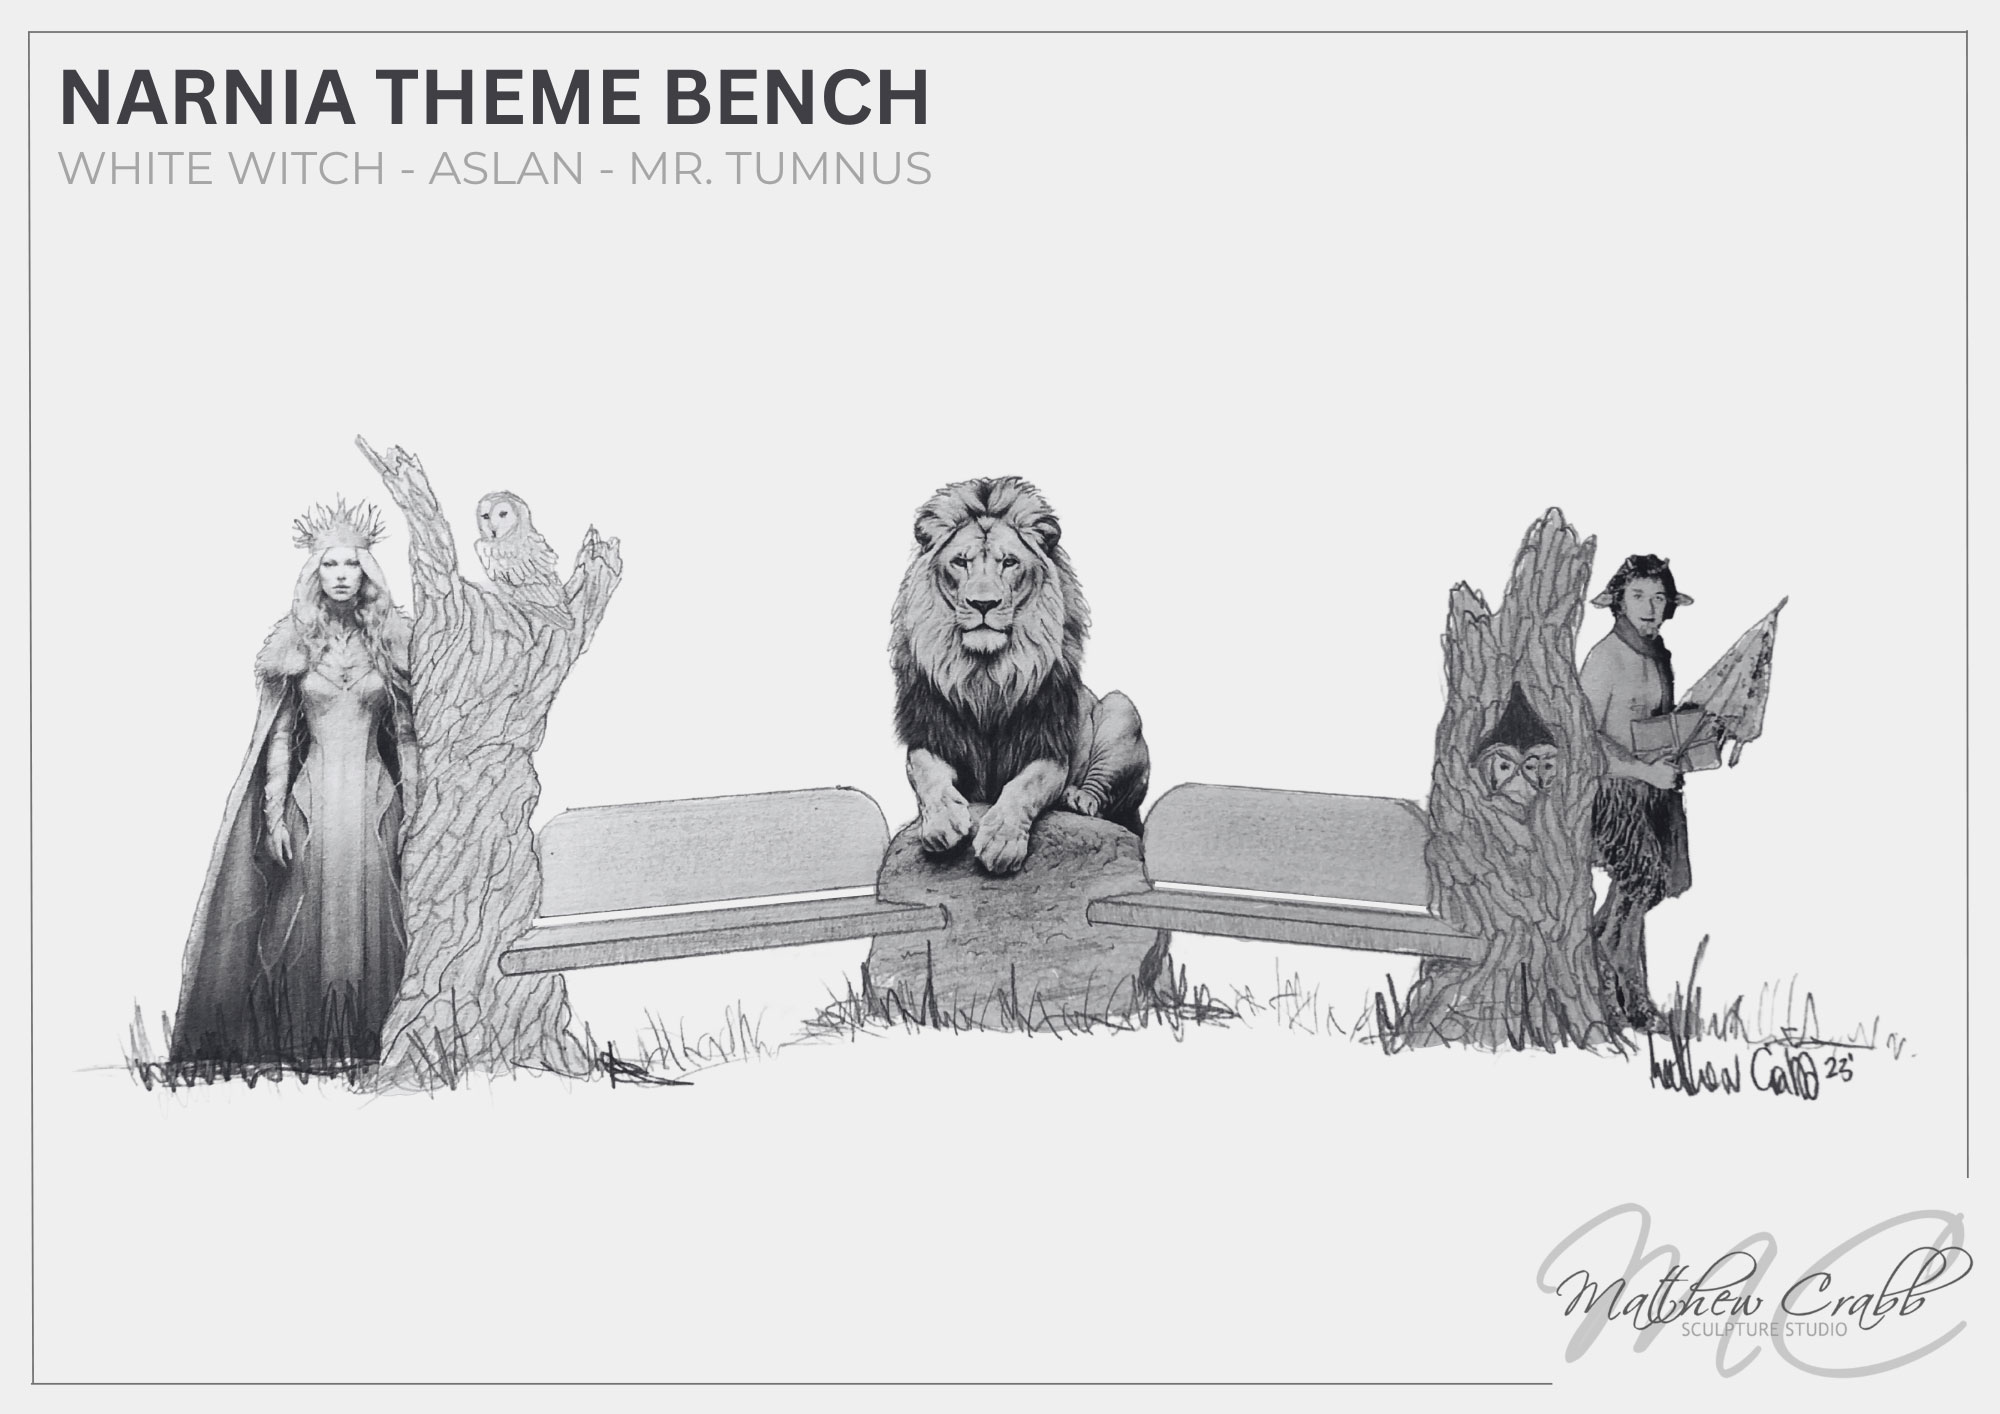 Narnia Bench Concept Design by Matthew Crabb